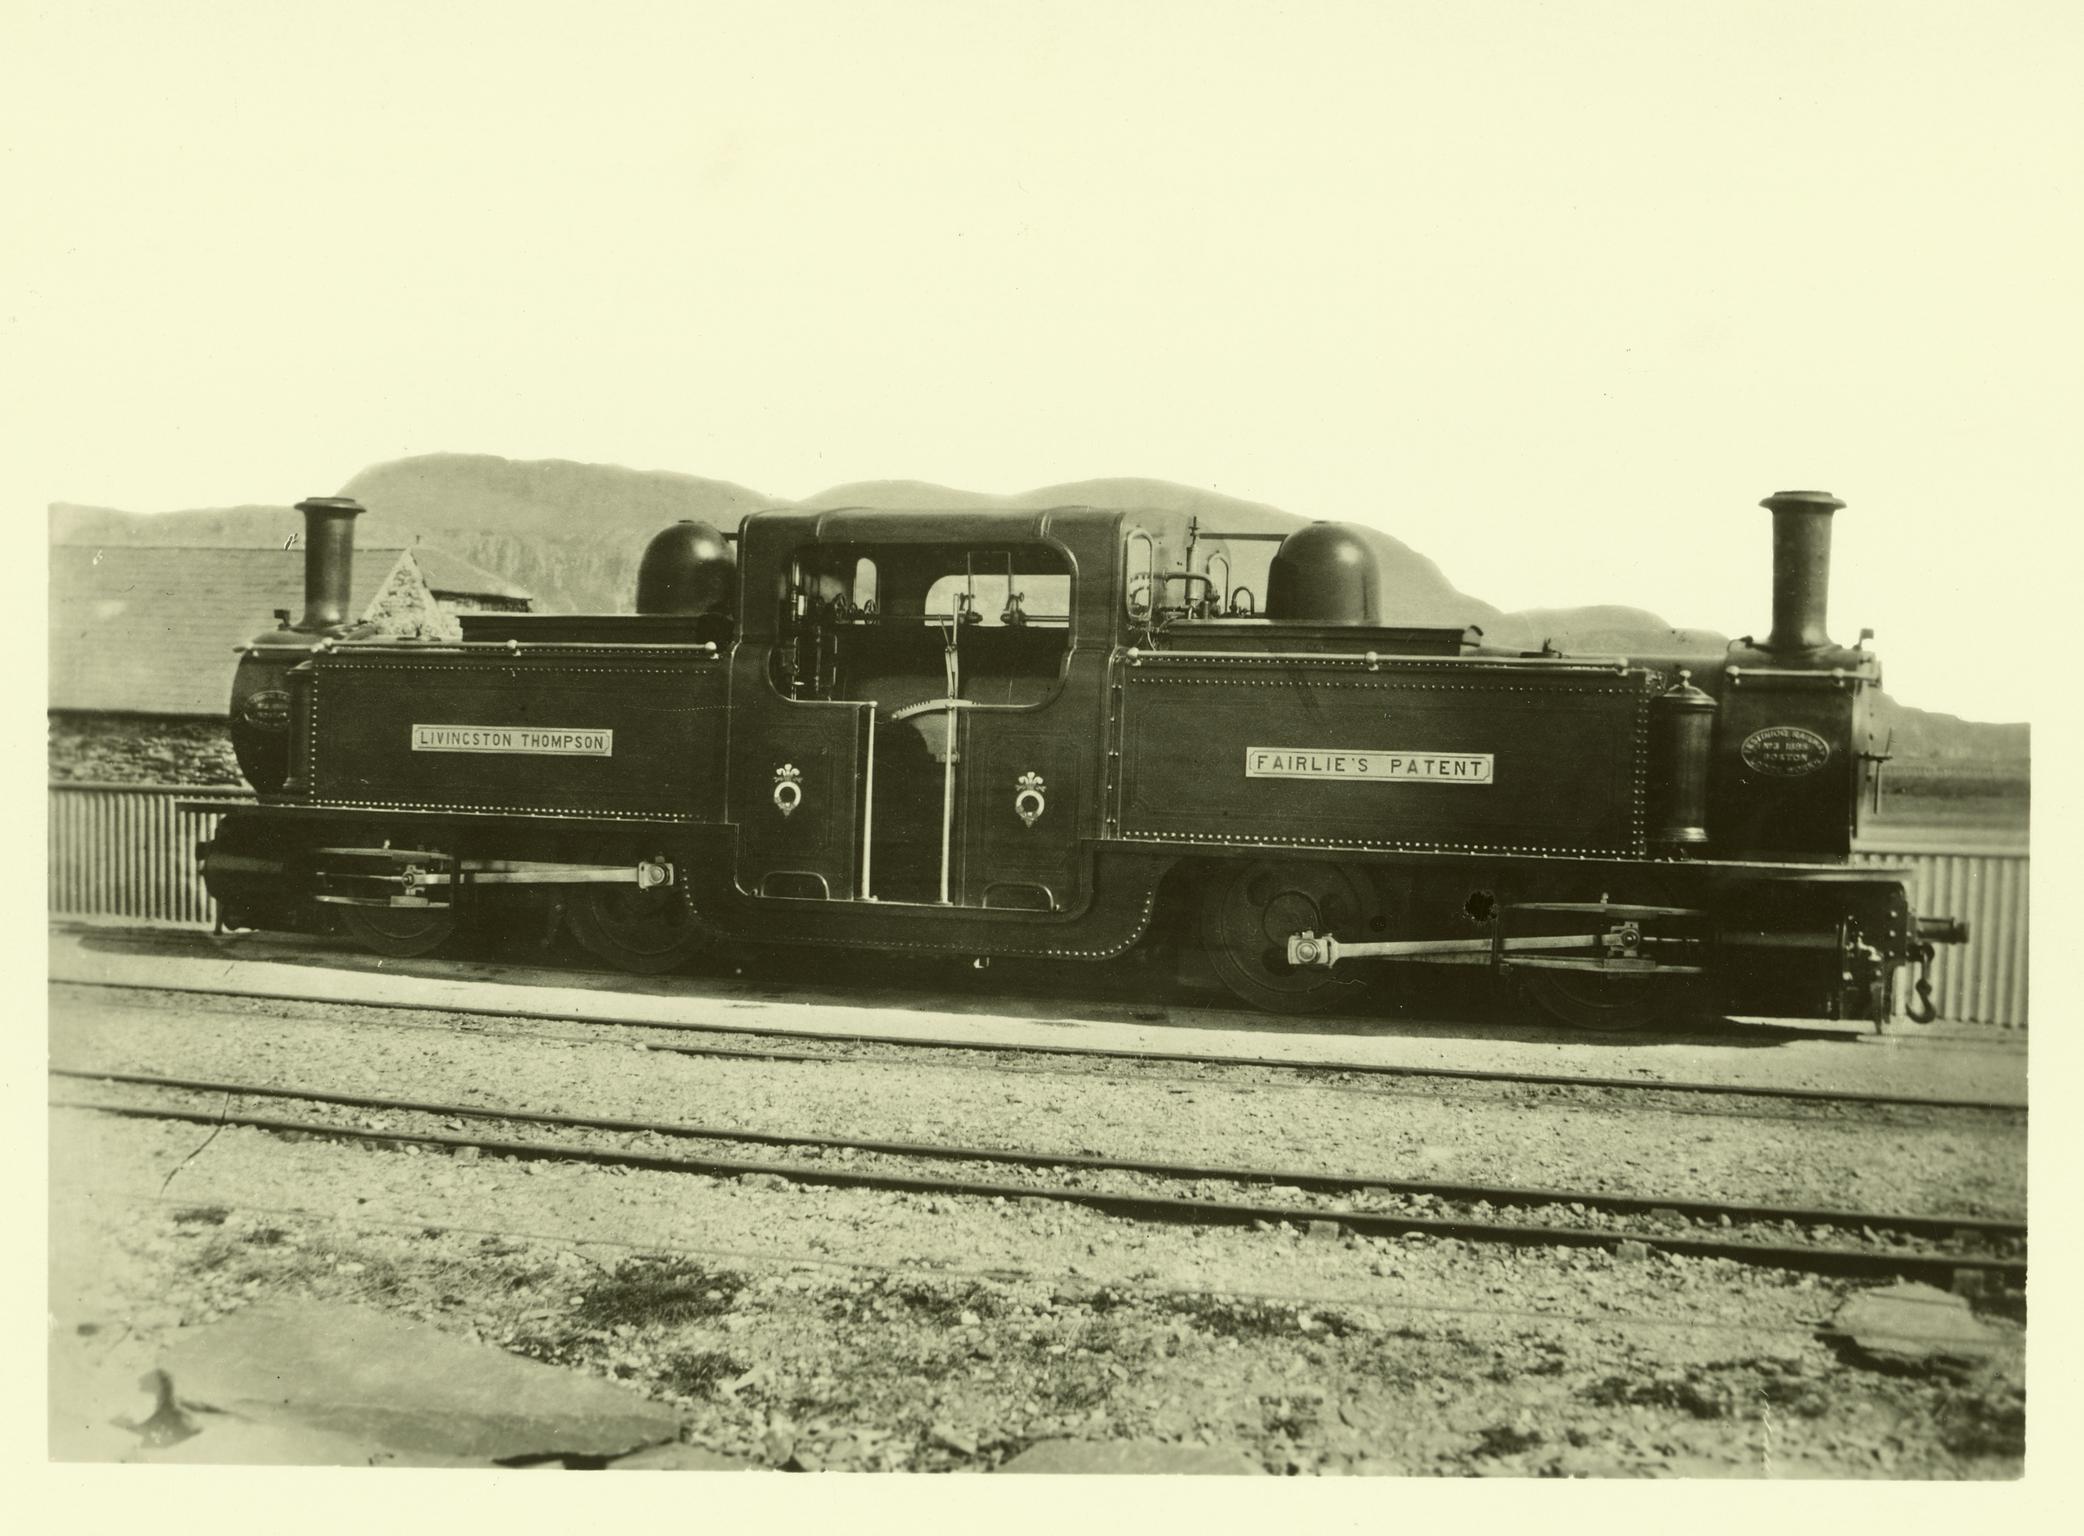 Festiniog Railway locomotive, photograph